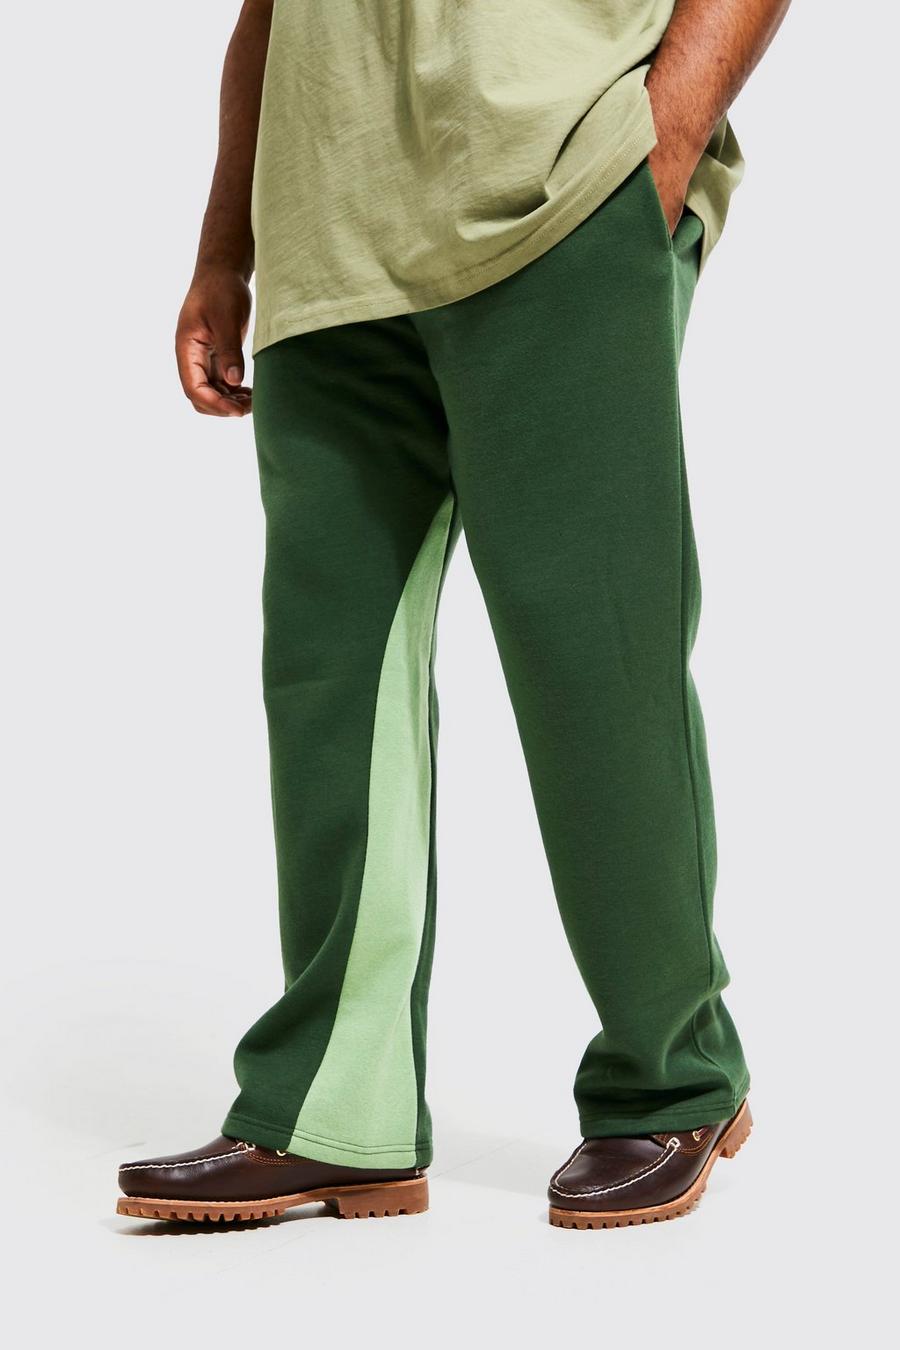 Pantalón deportivo Plus Regular con panel y refuerzo, Khaki caqui image number 1